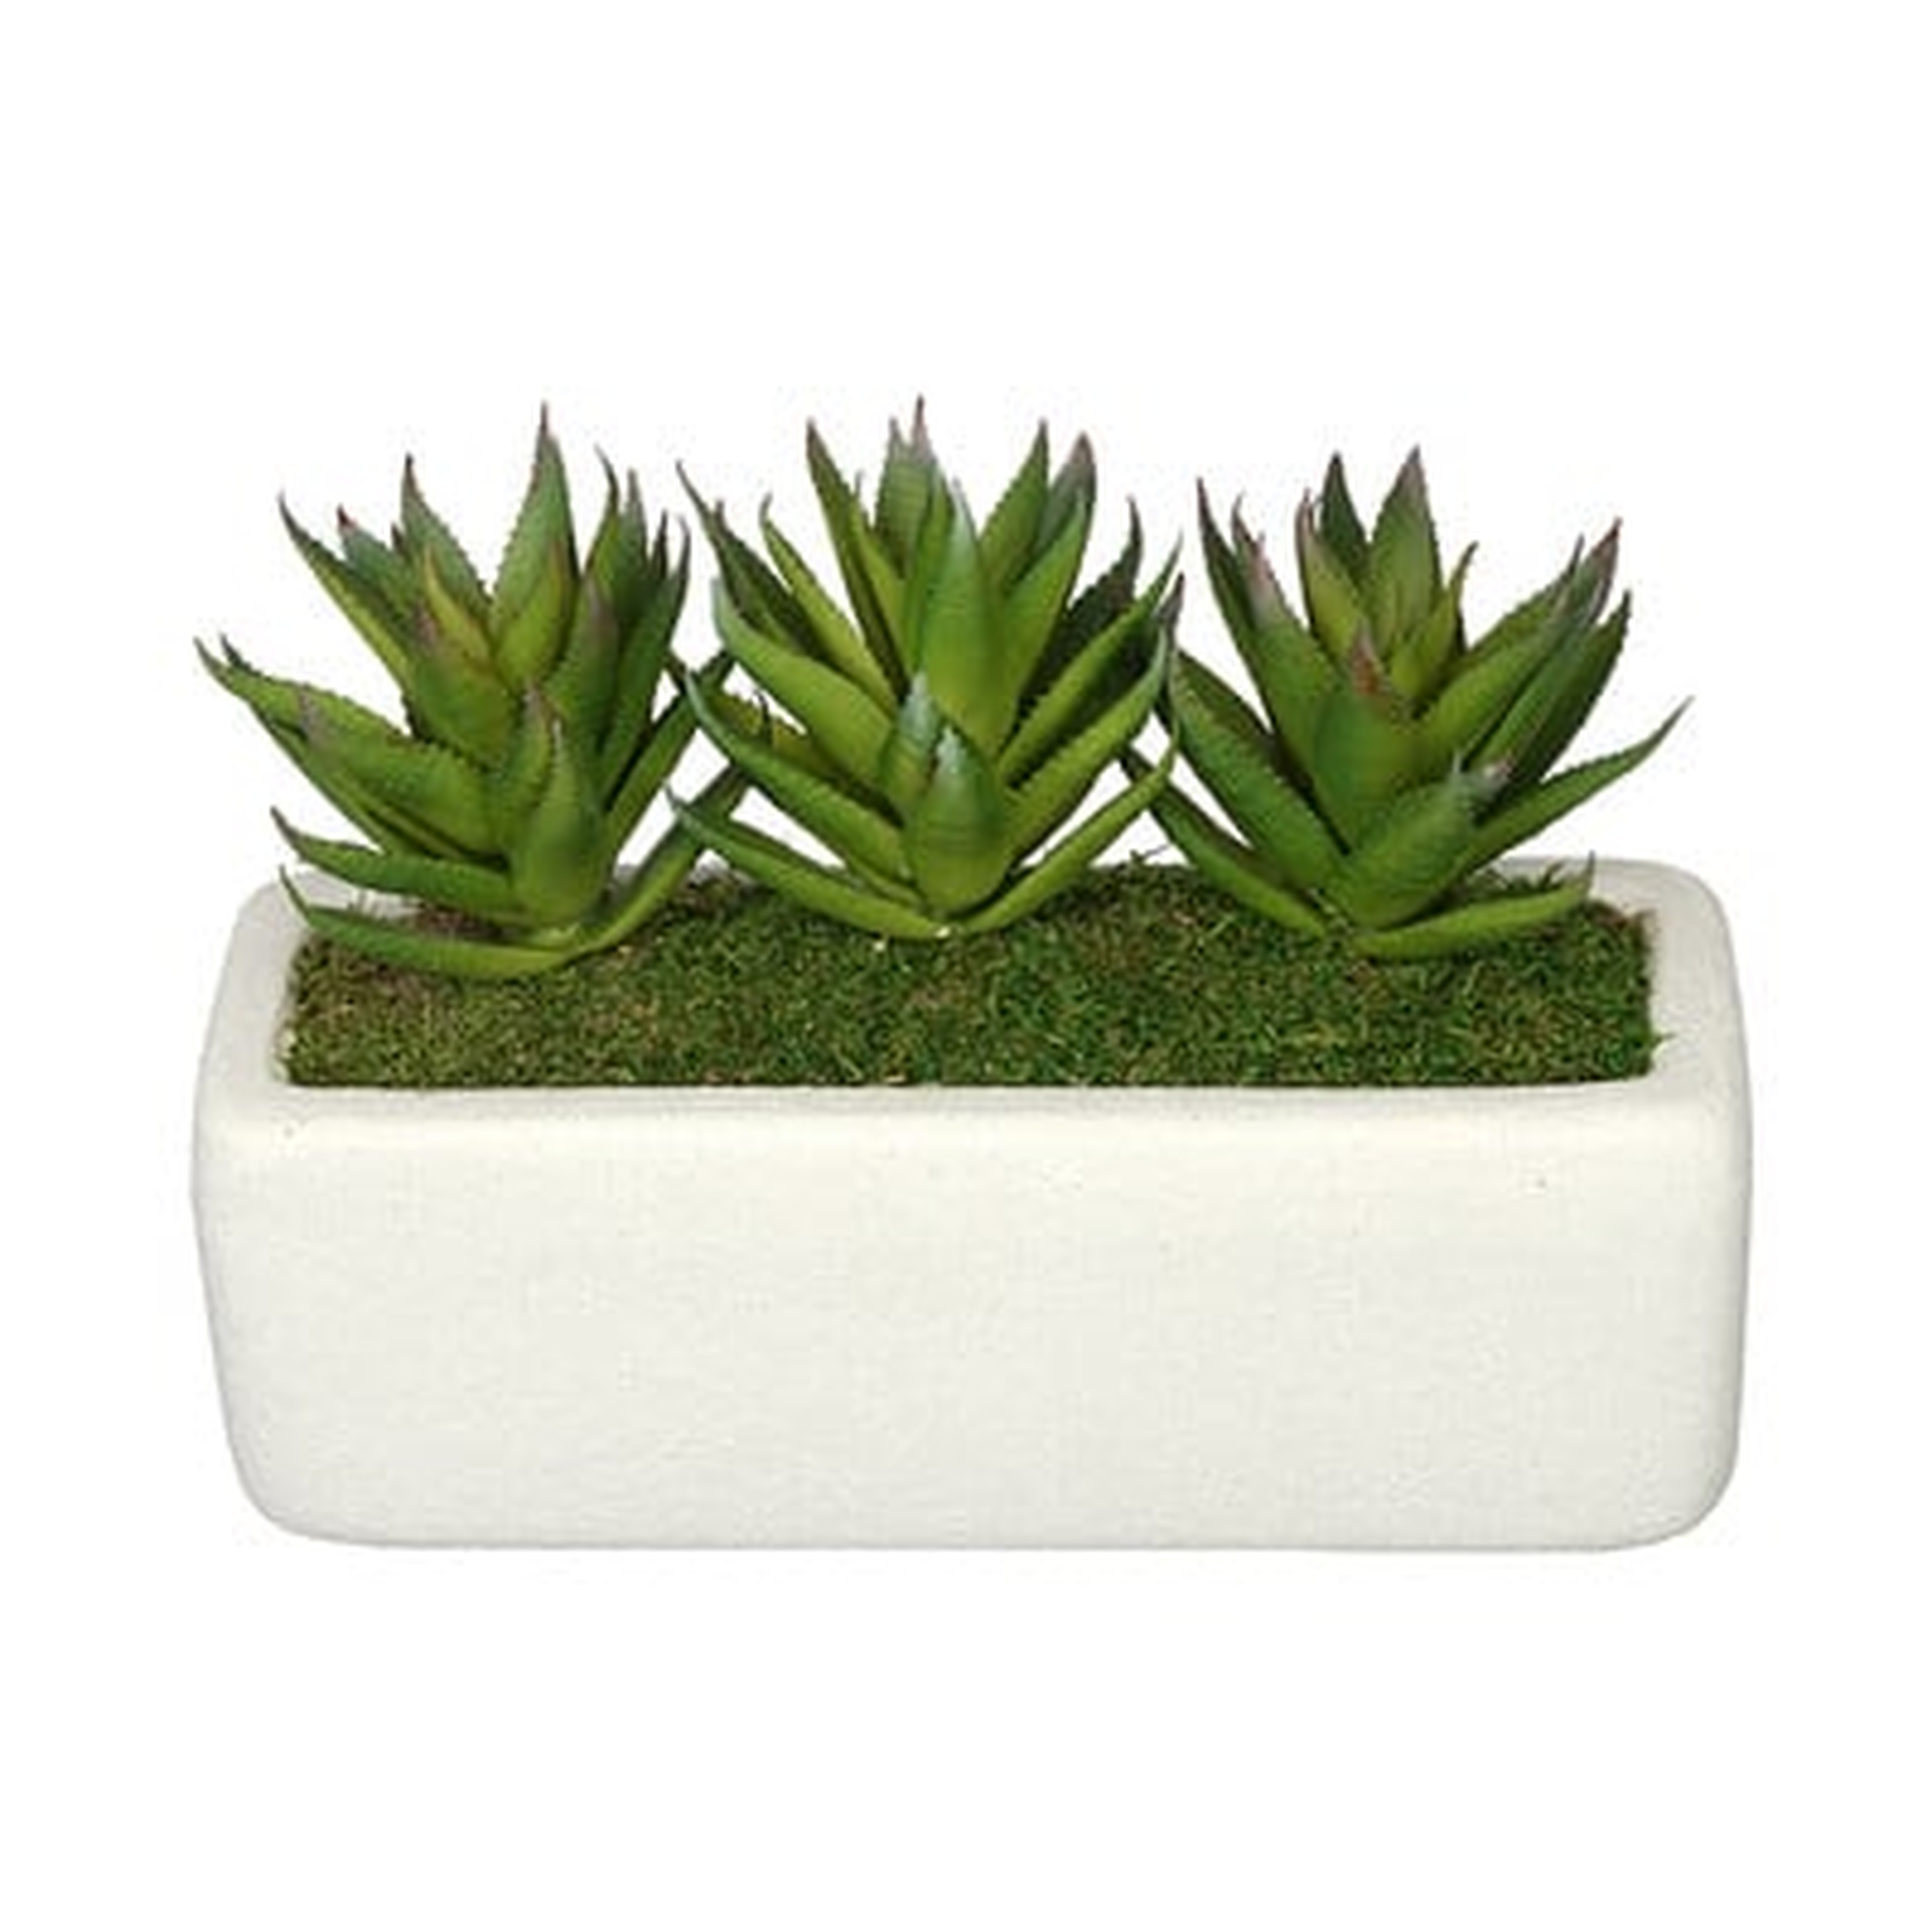 Artificial Green Aloe Plant in Decorative Vase - Wayfair